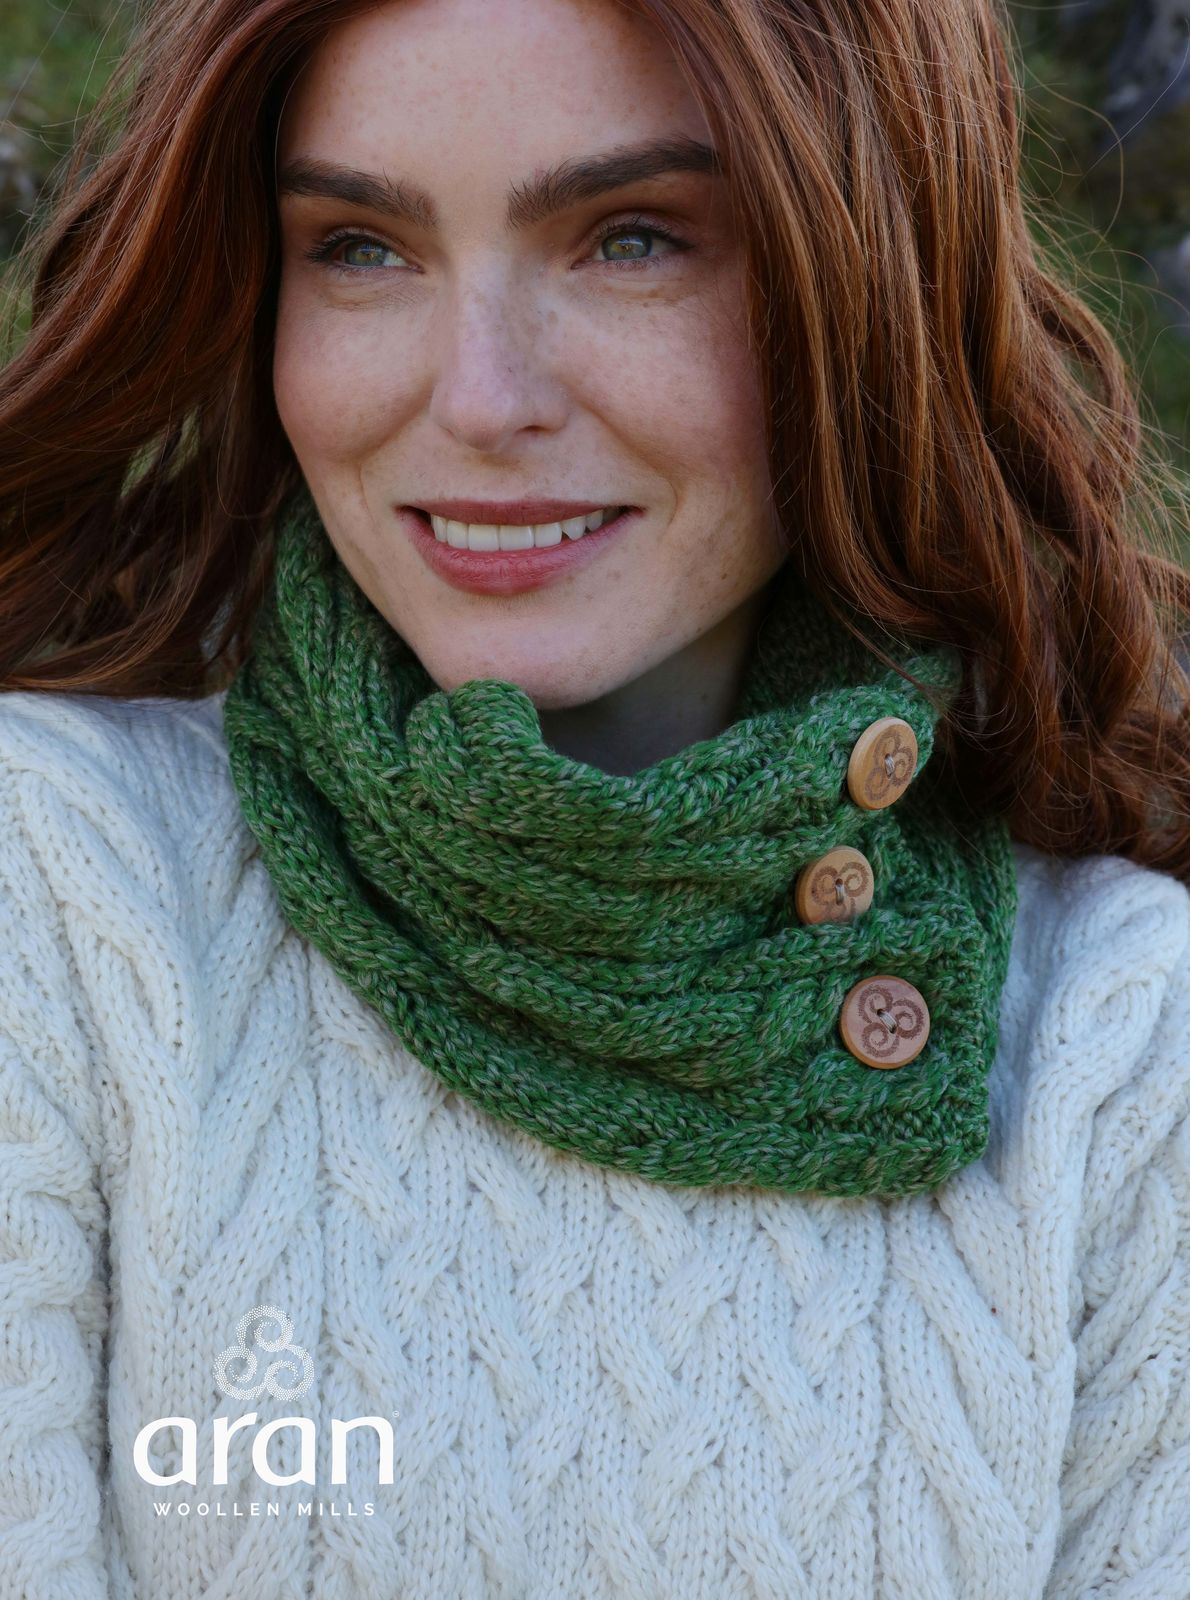 Aran Woollen Mills - B948 | infinity scarf merino wool with buttons